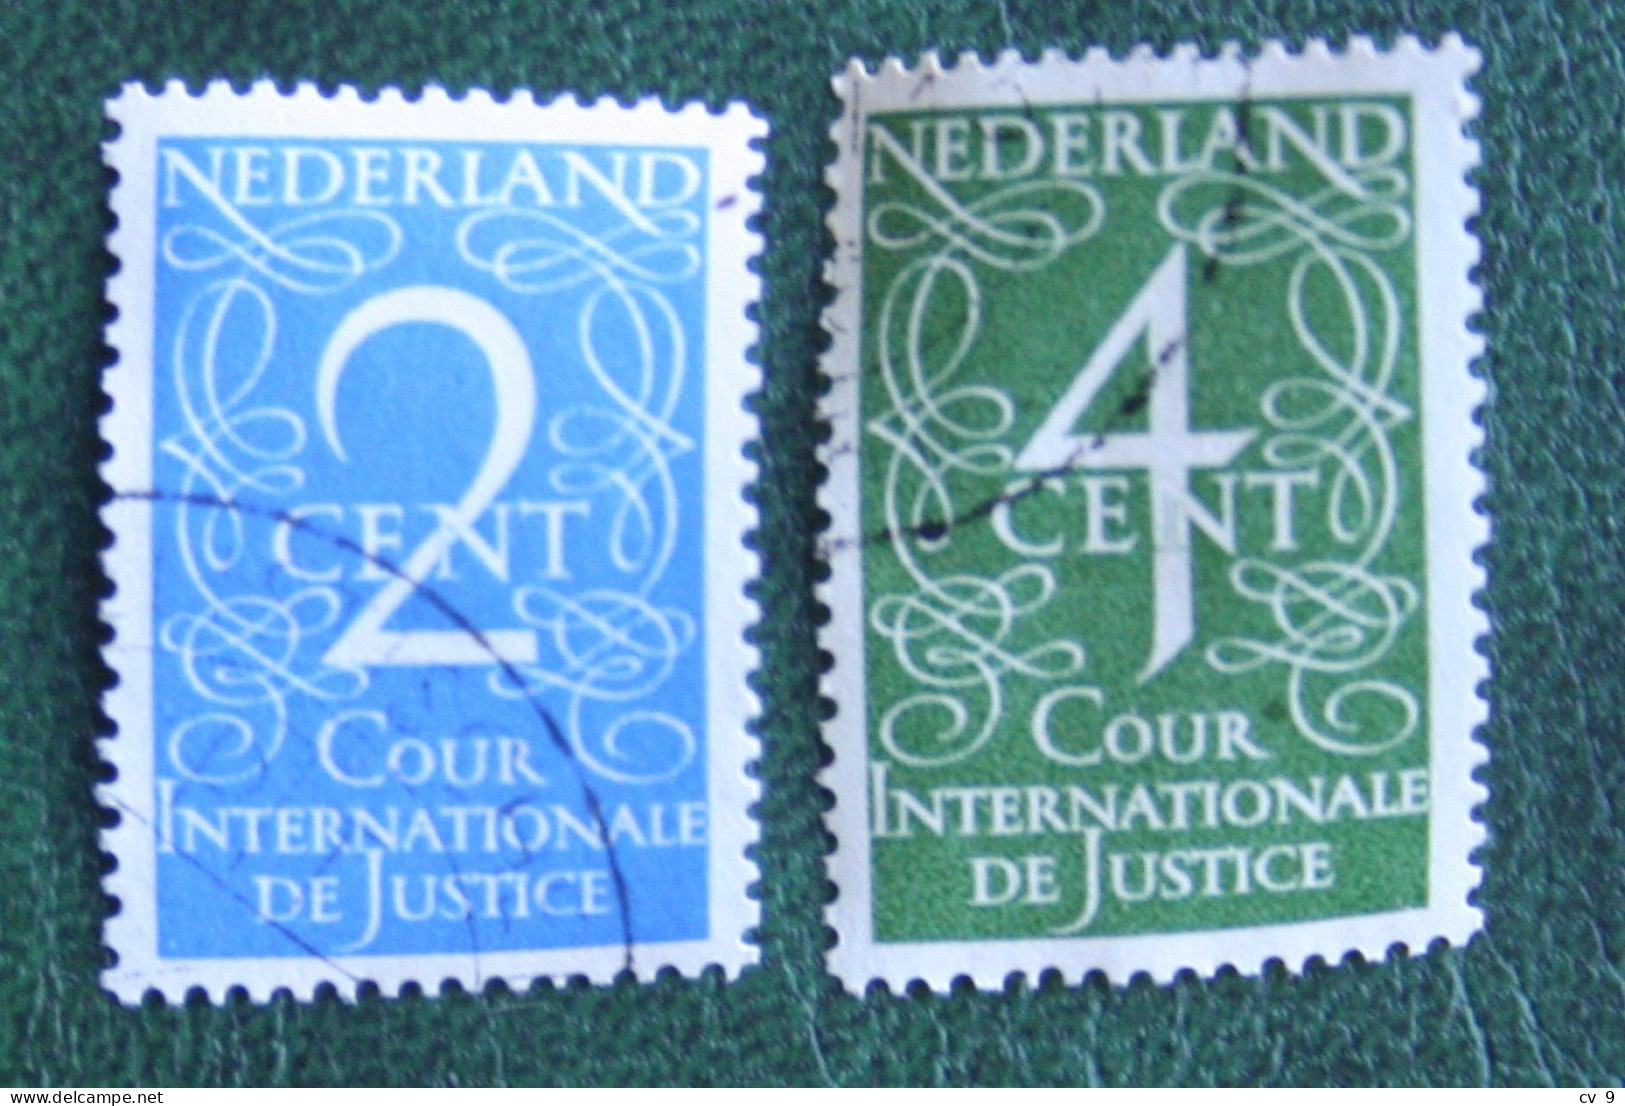 Dienst Cour Internationale De Justice NVPH D25-D26 D 25 (Mi 25-26) 1950 Gestempeld / Used NEDERLAND / NIEDERLANDE - Servizio